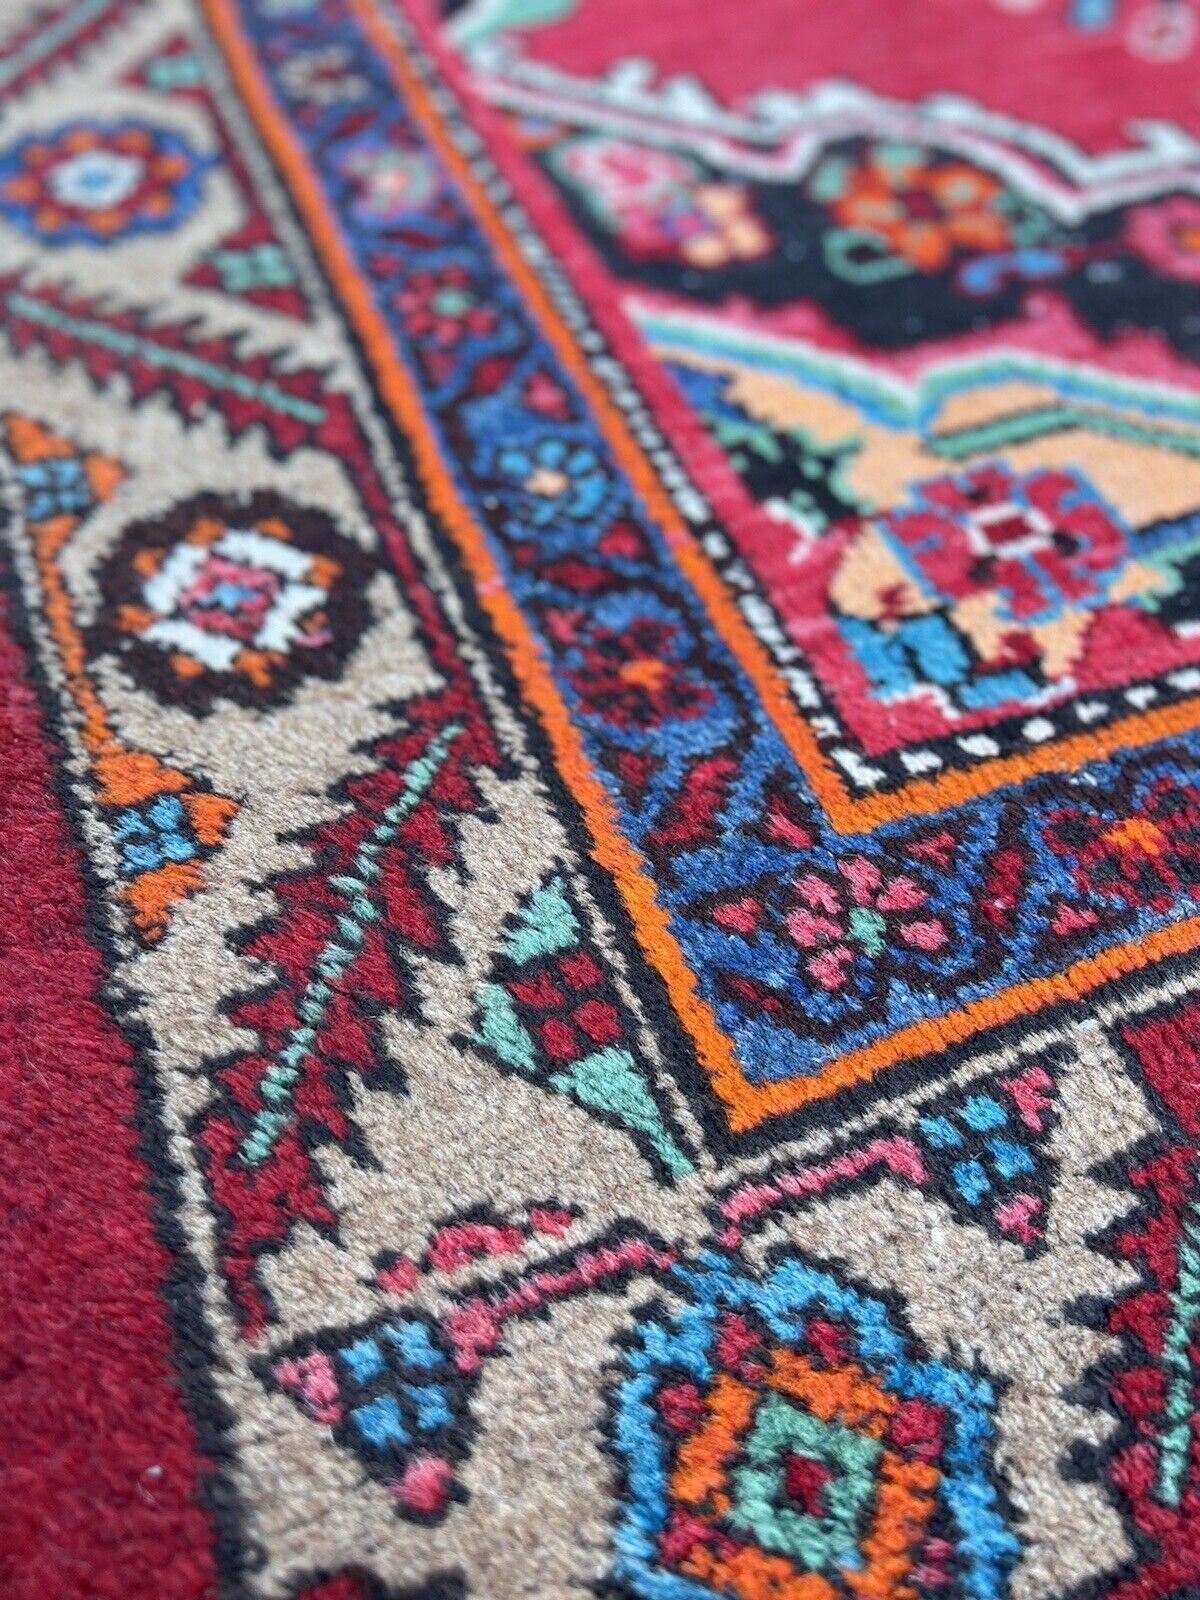 Mid-20th Century Handmade Vintage Persian Style Hamadan Rug 3.8' x 6.6', 1950s - 1S48 For Sale